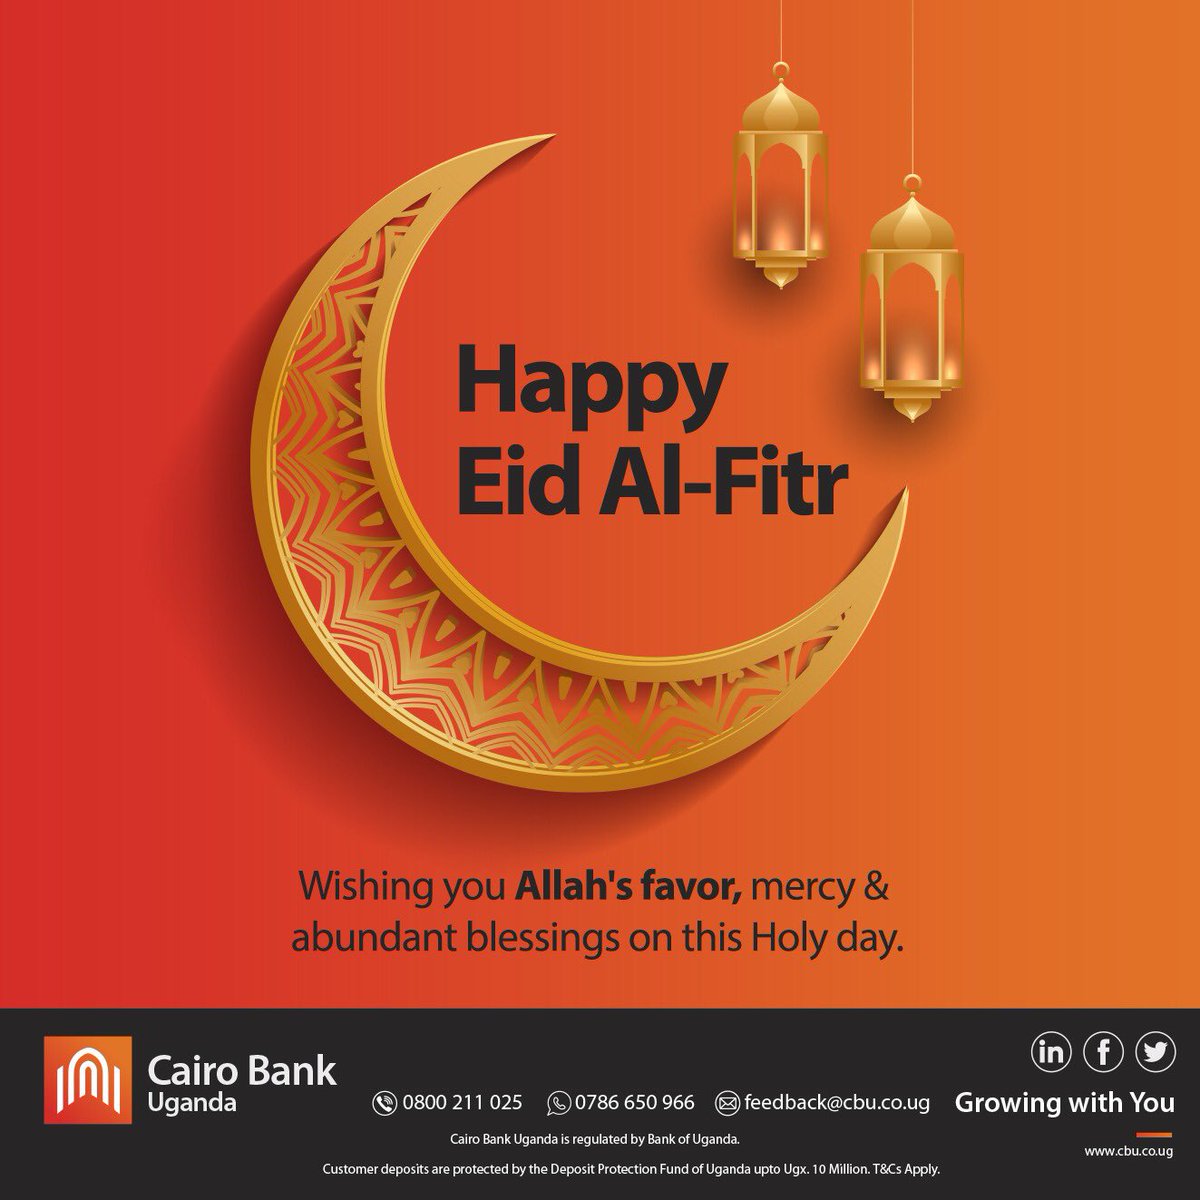 May this Eid bring you love, peace, and joy! Happy Eid!

#CairoBank #Eid2023 #EidAlFitr2023 #EidHolidays #EidUlFitr #eidulfitr2023